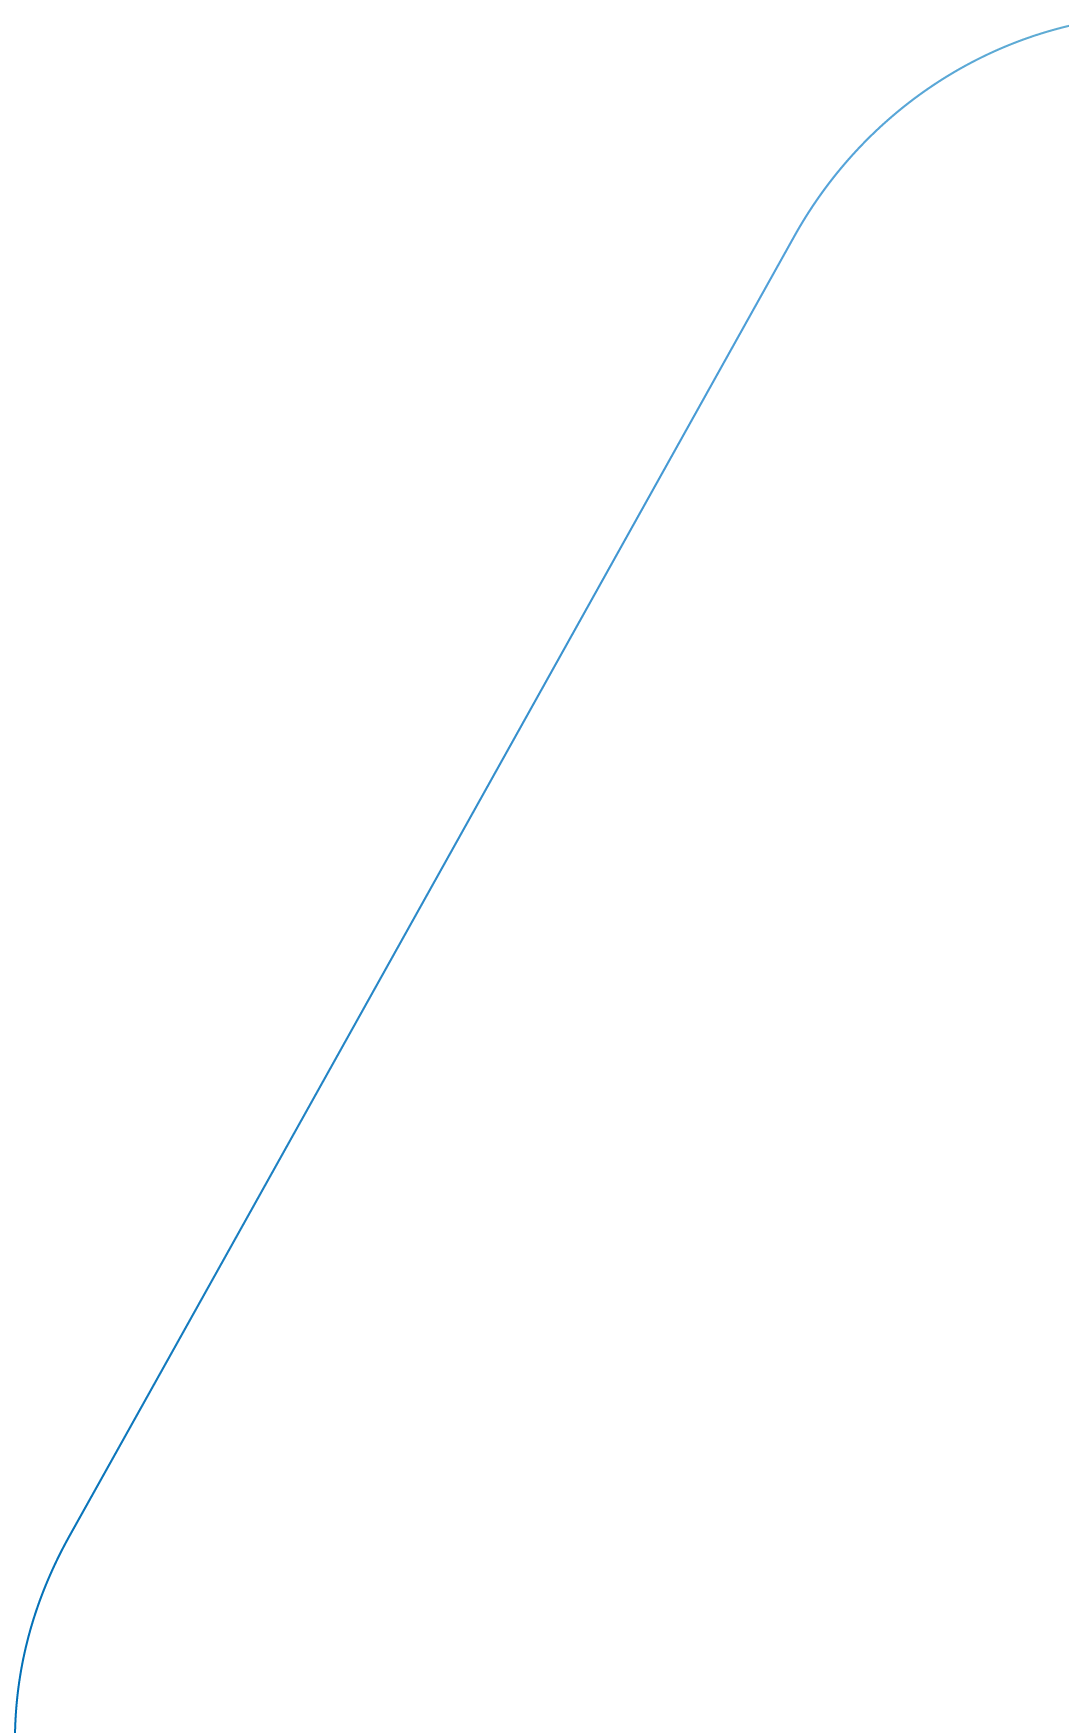 Curvy straight blue line